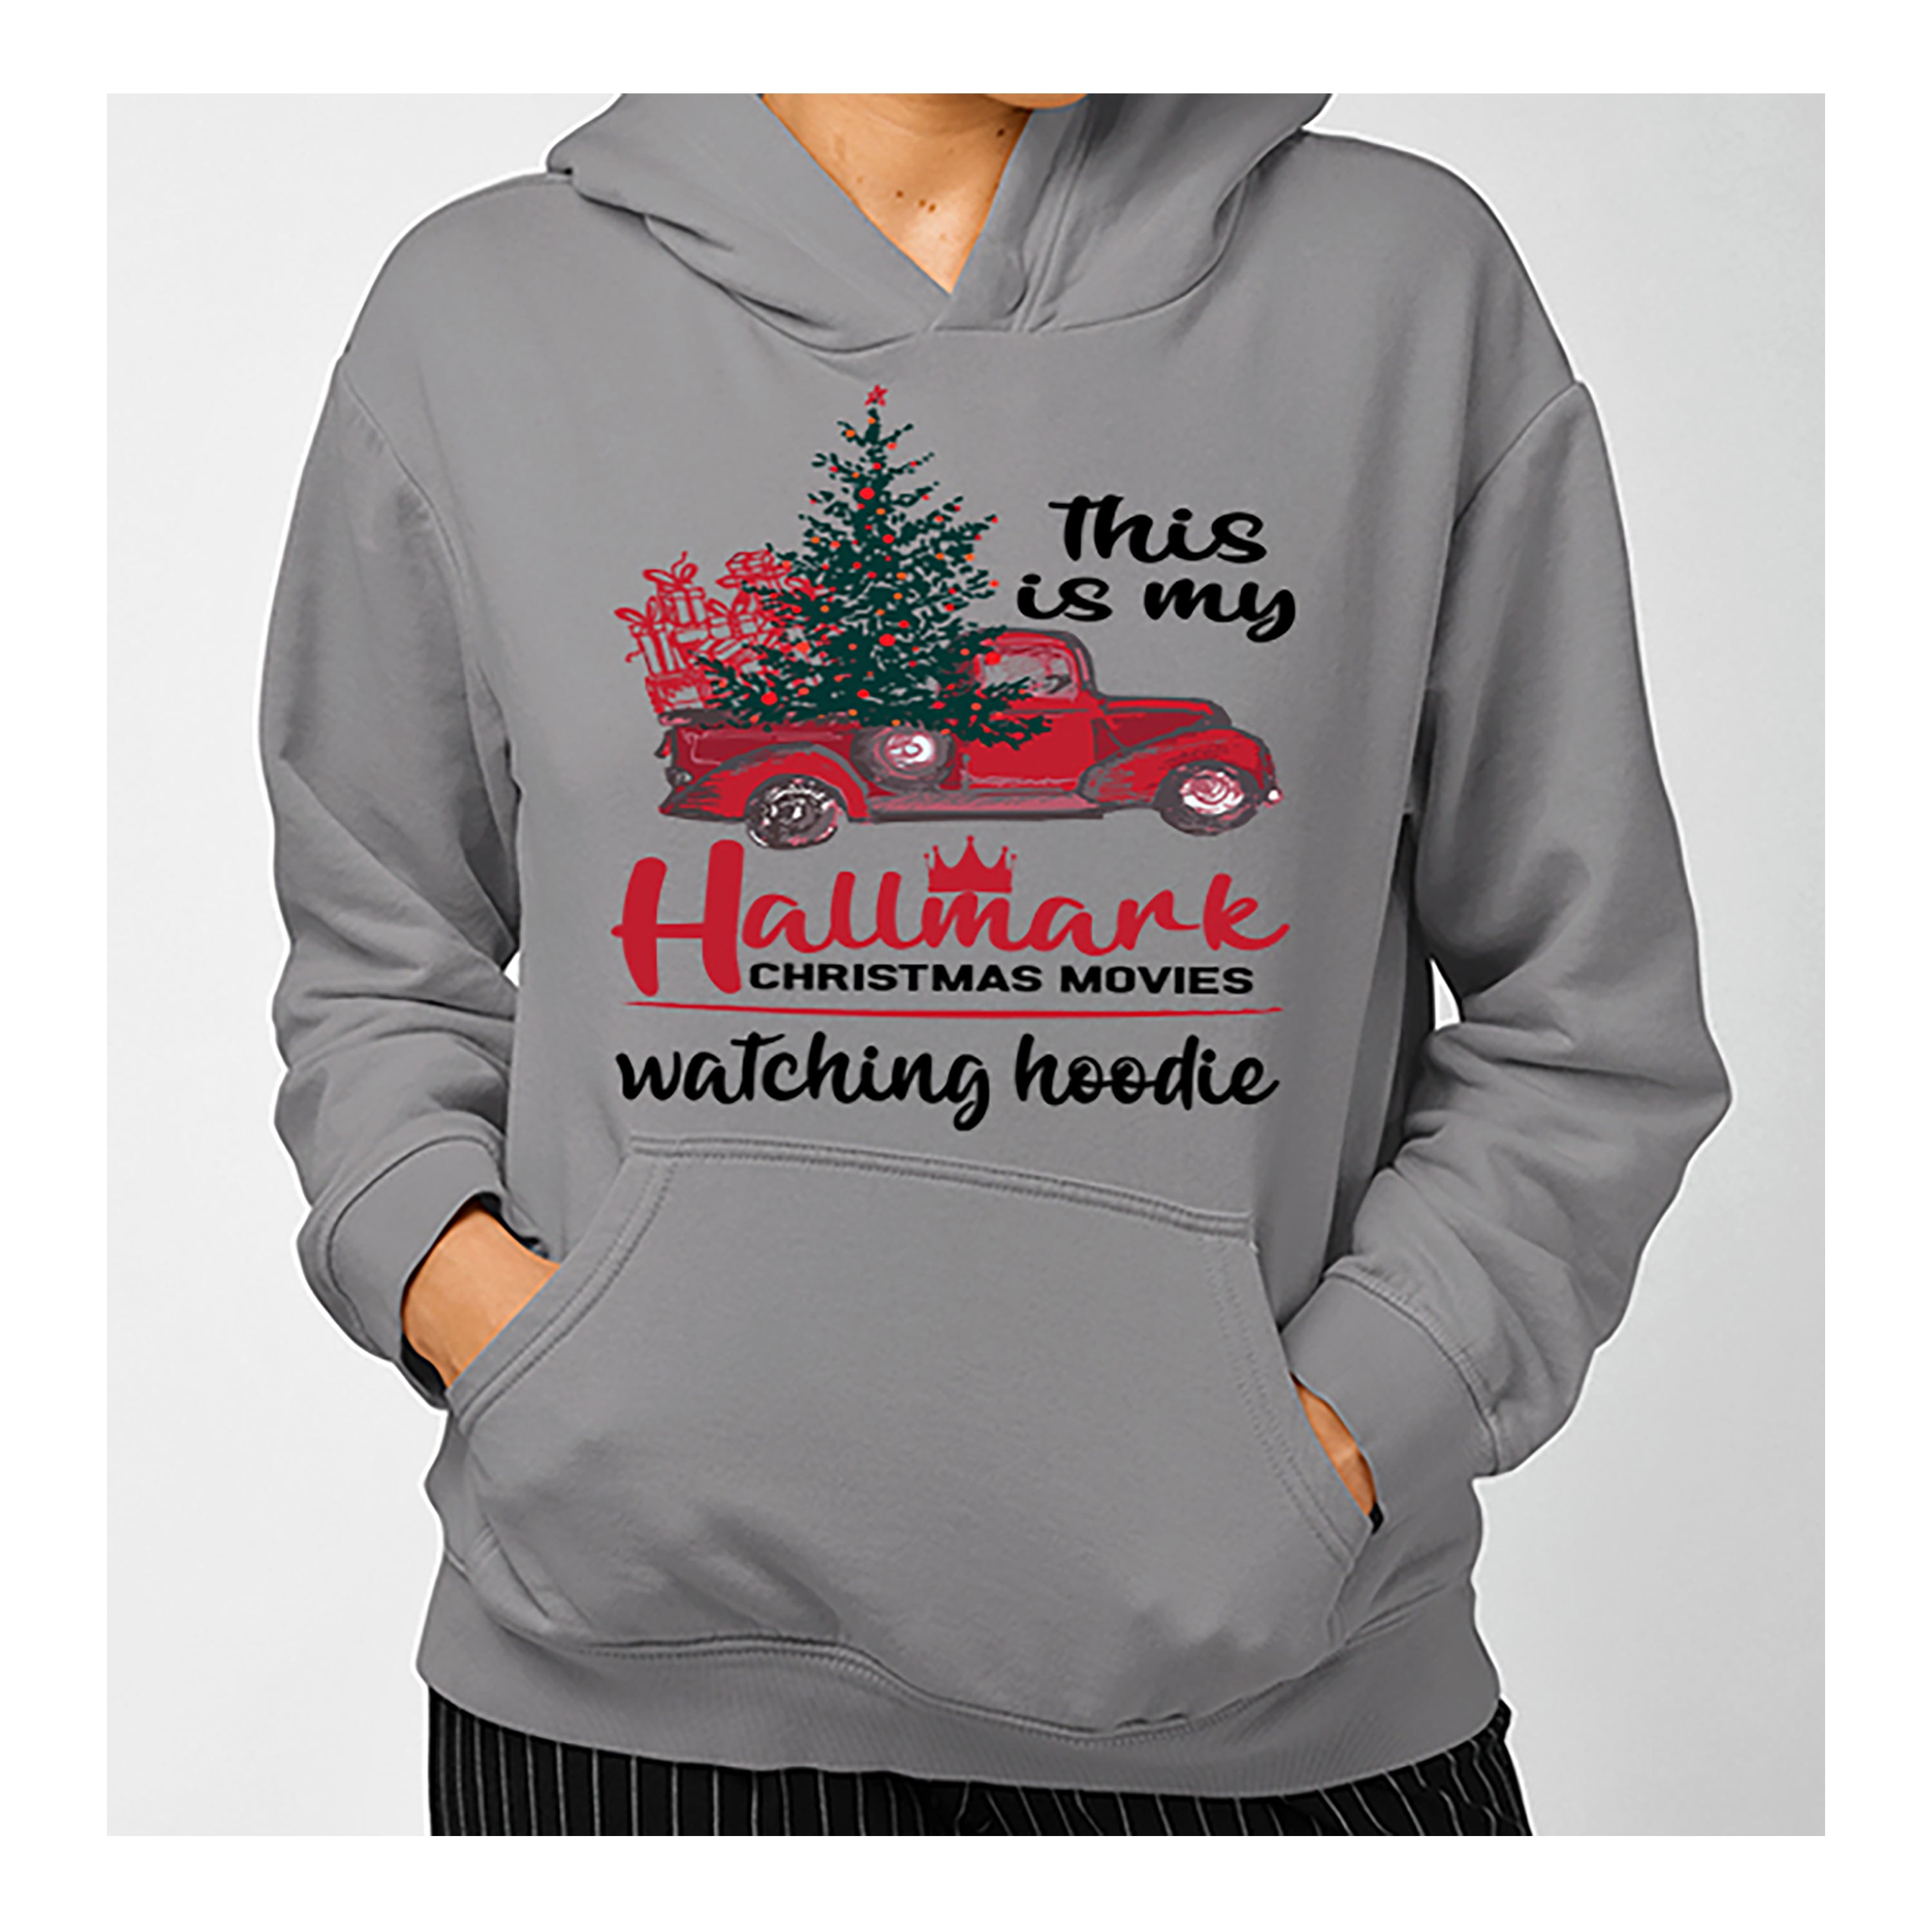 "My Hallmark Christmas Movies" Hoodie & Sweatshirt.